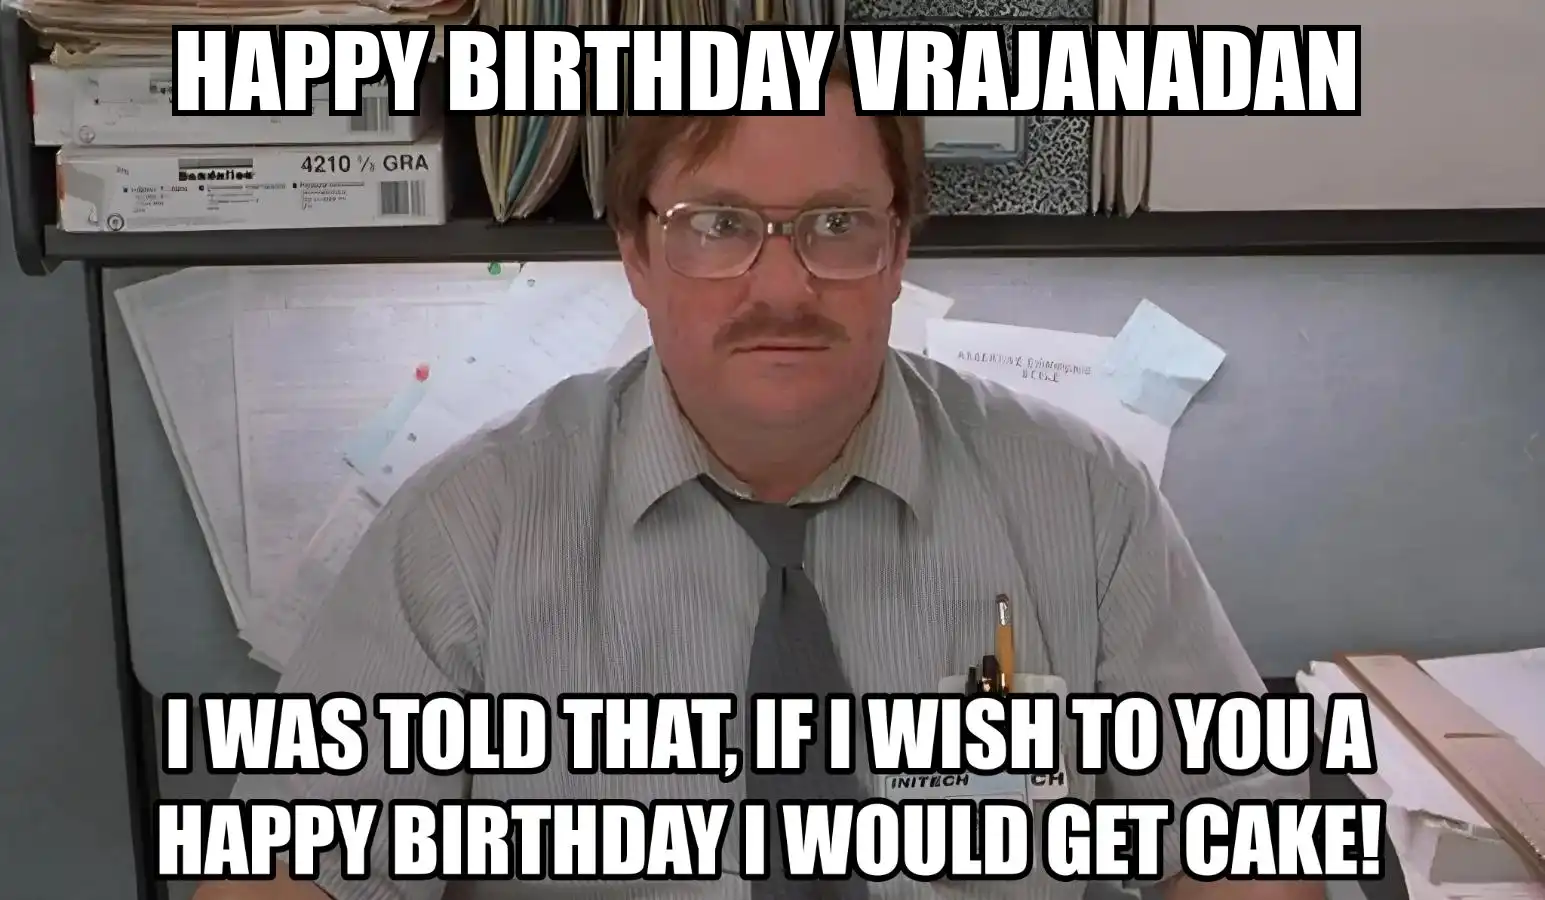 Happy Birthday Vrajanadan I Would Get A Cake Meme